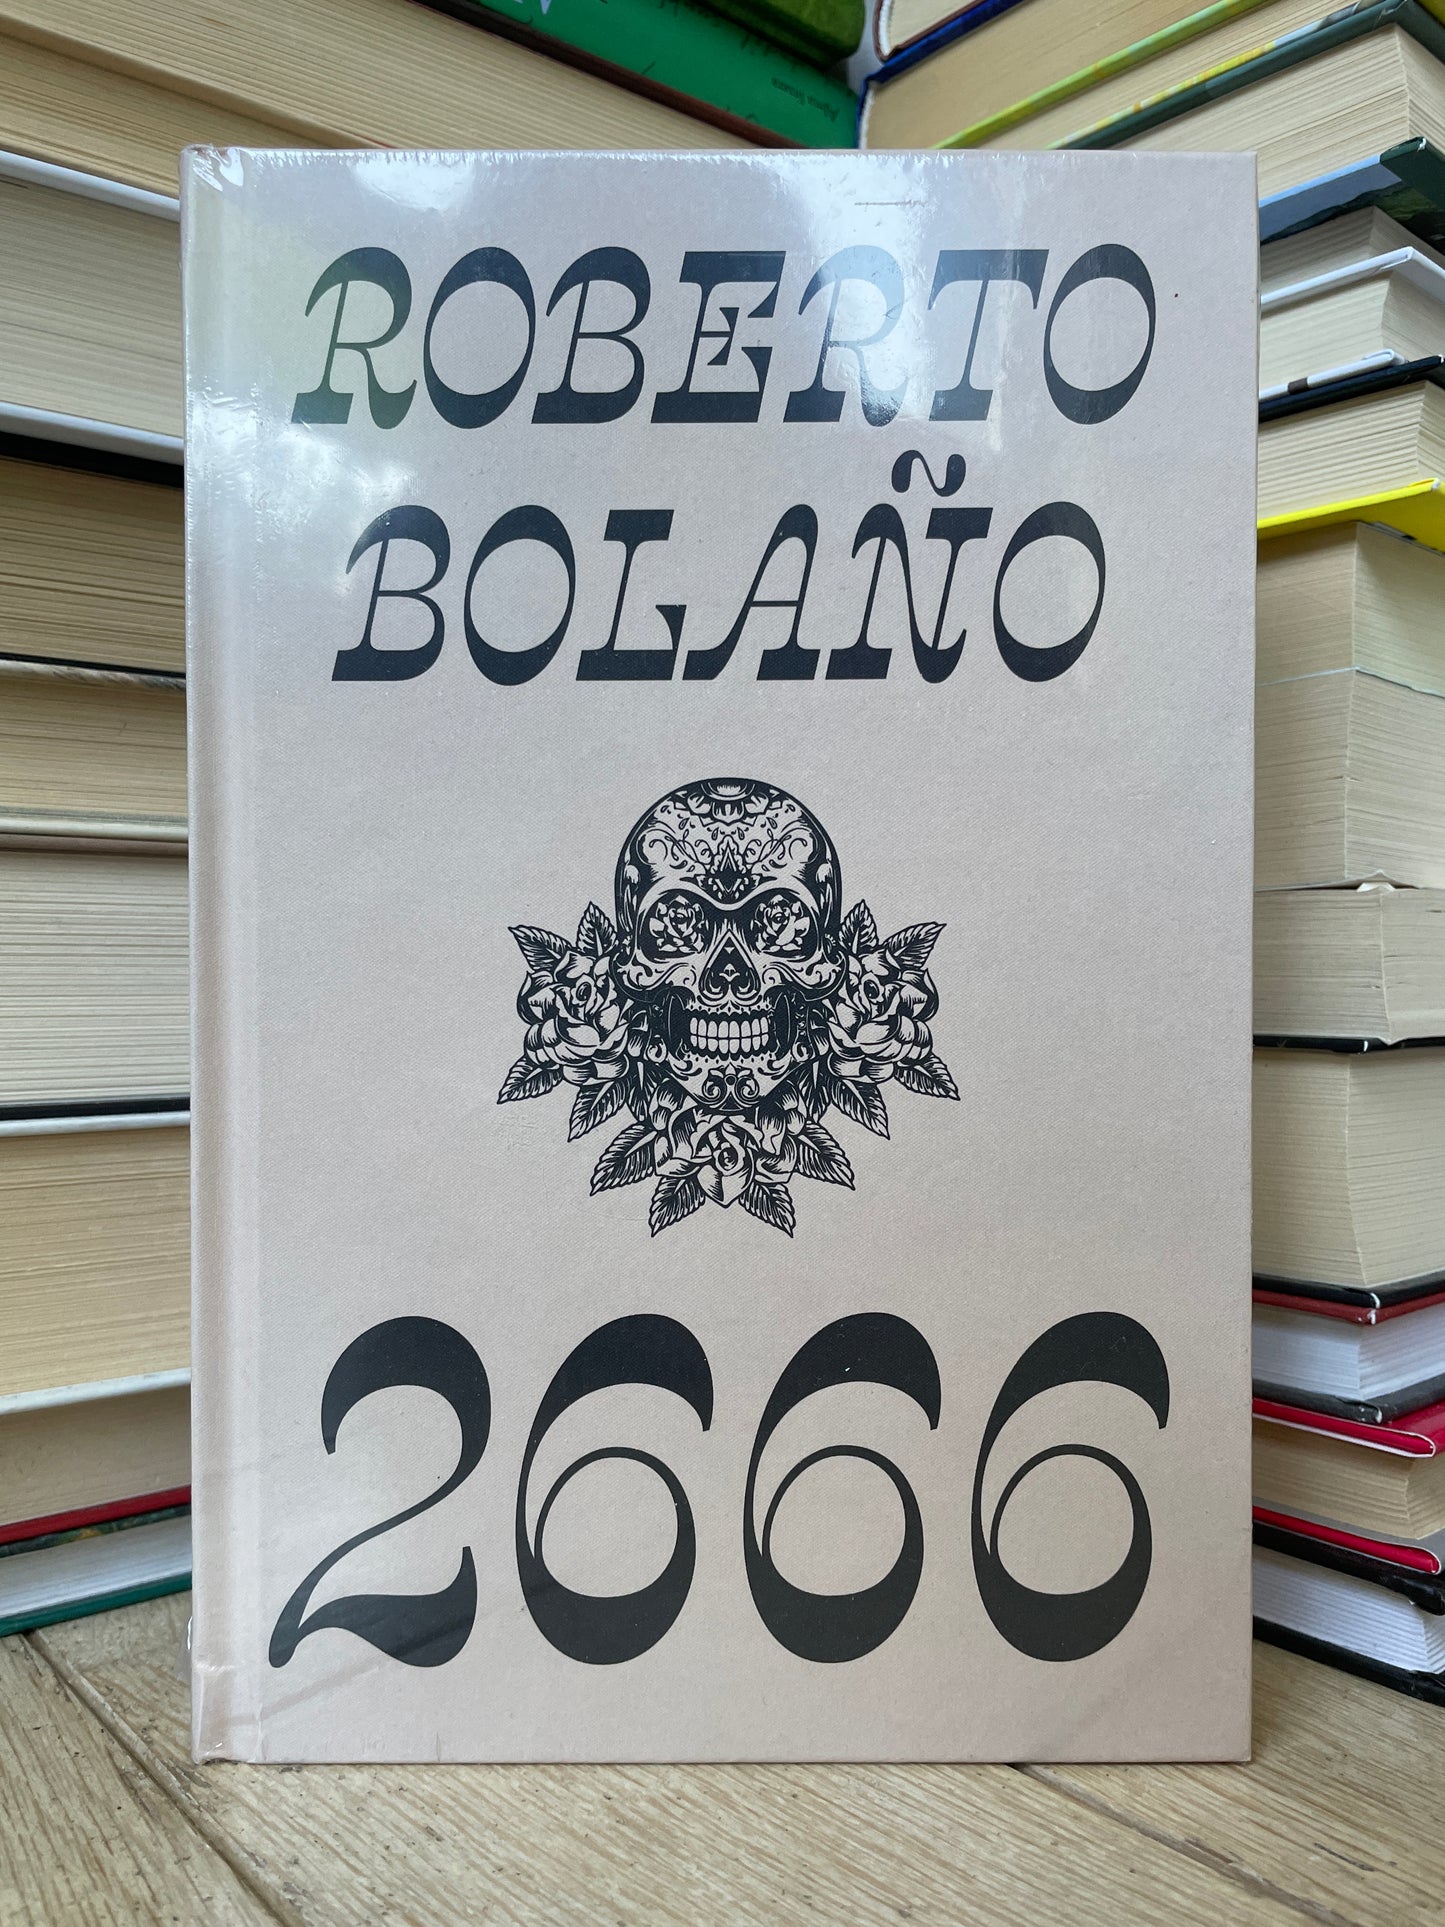 Roberto Bolano - ,,2666"